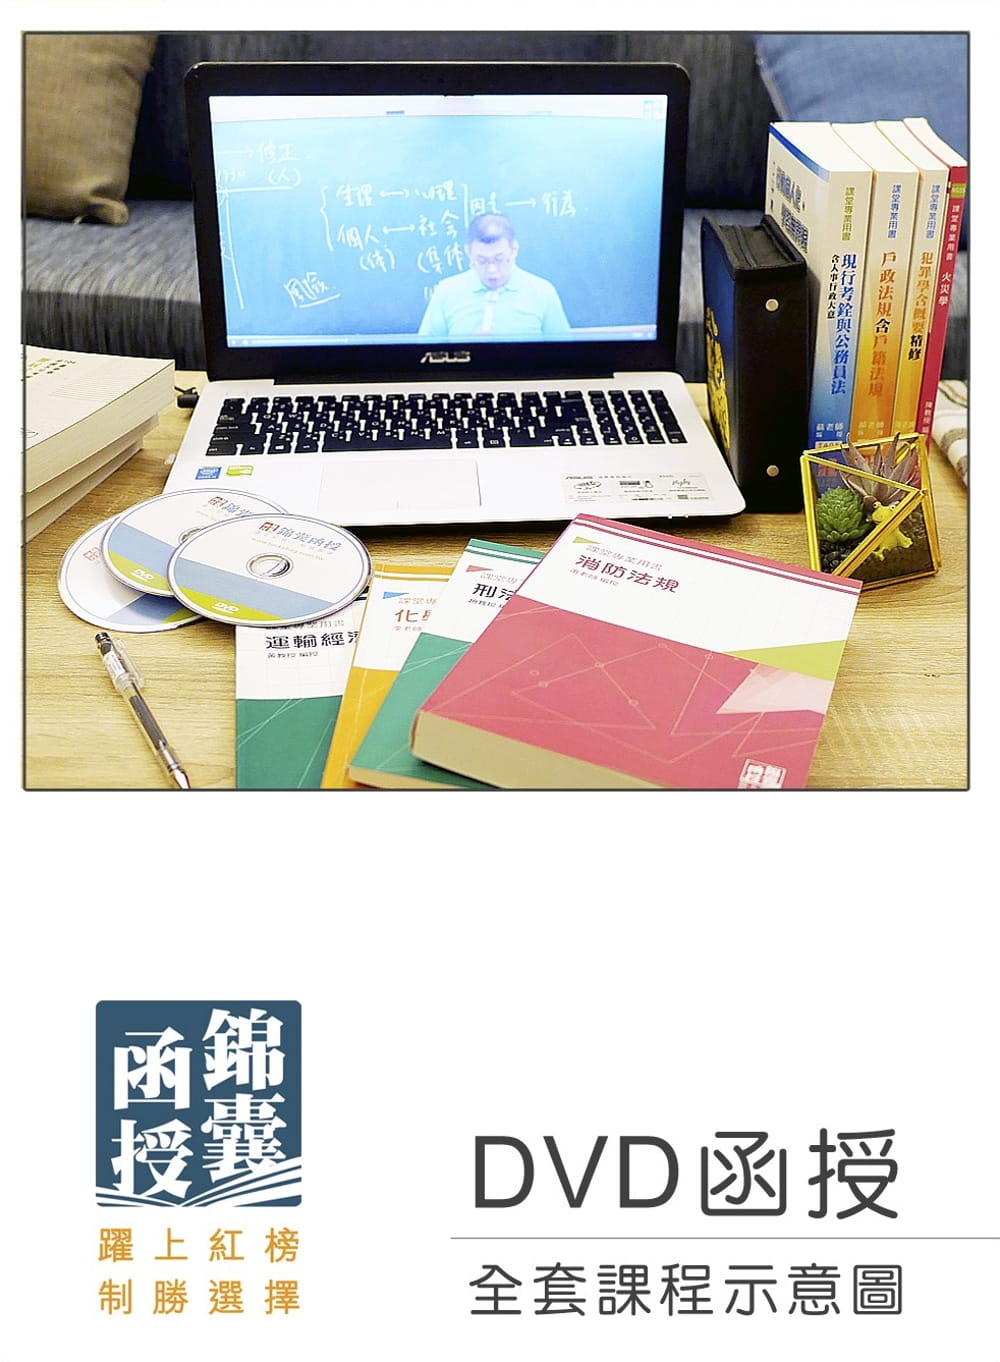 DVD函授